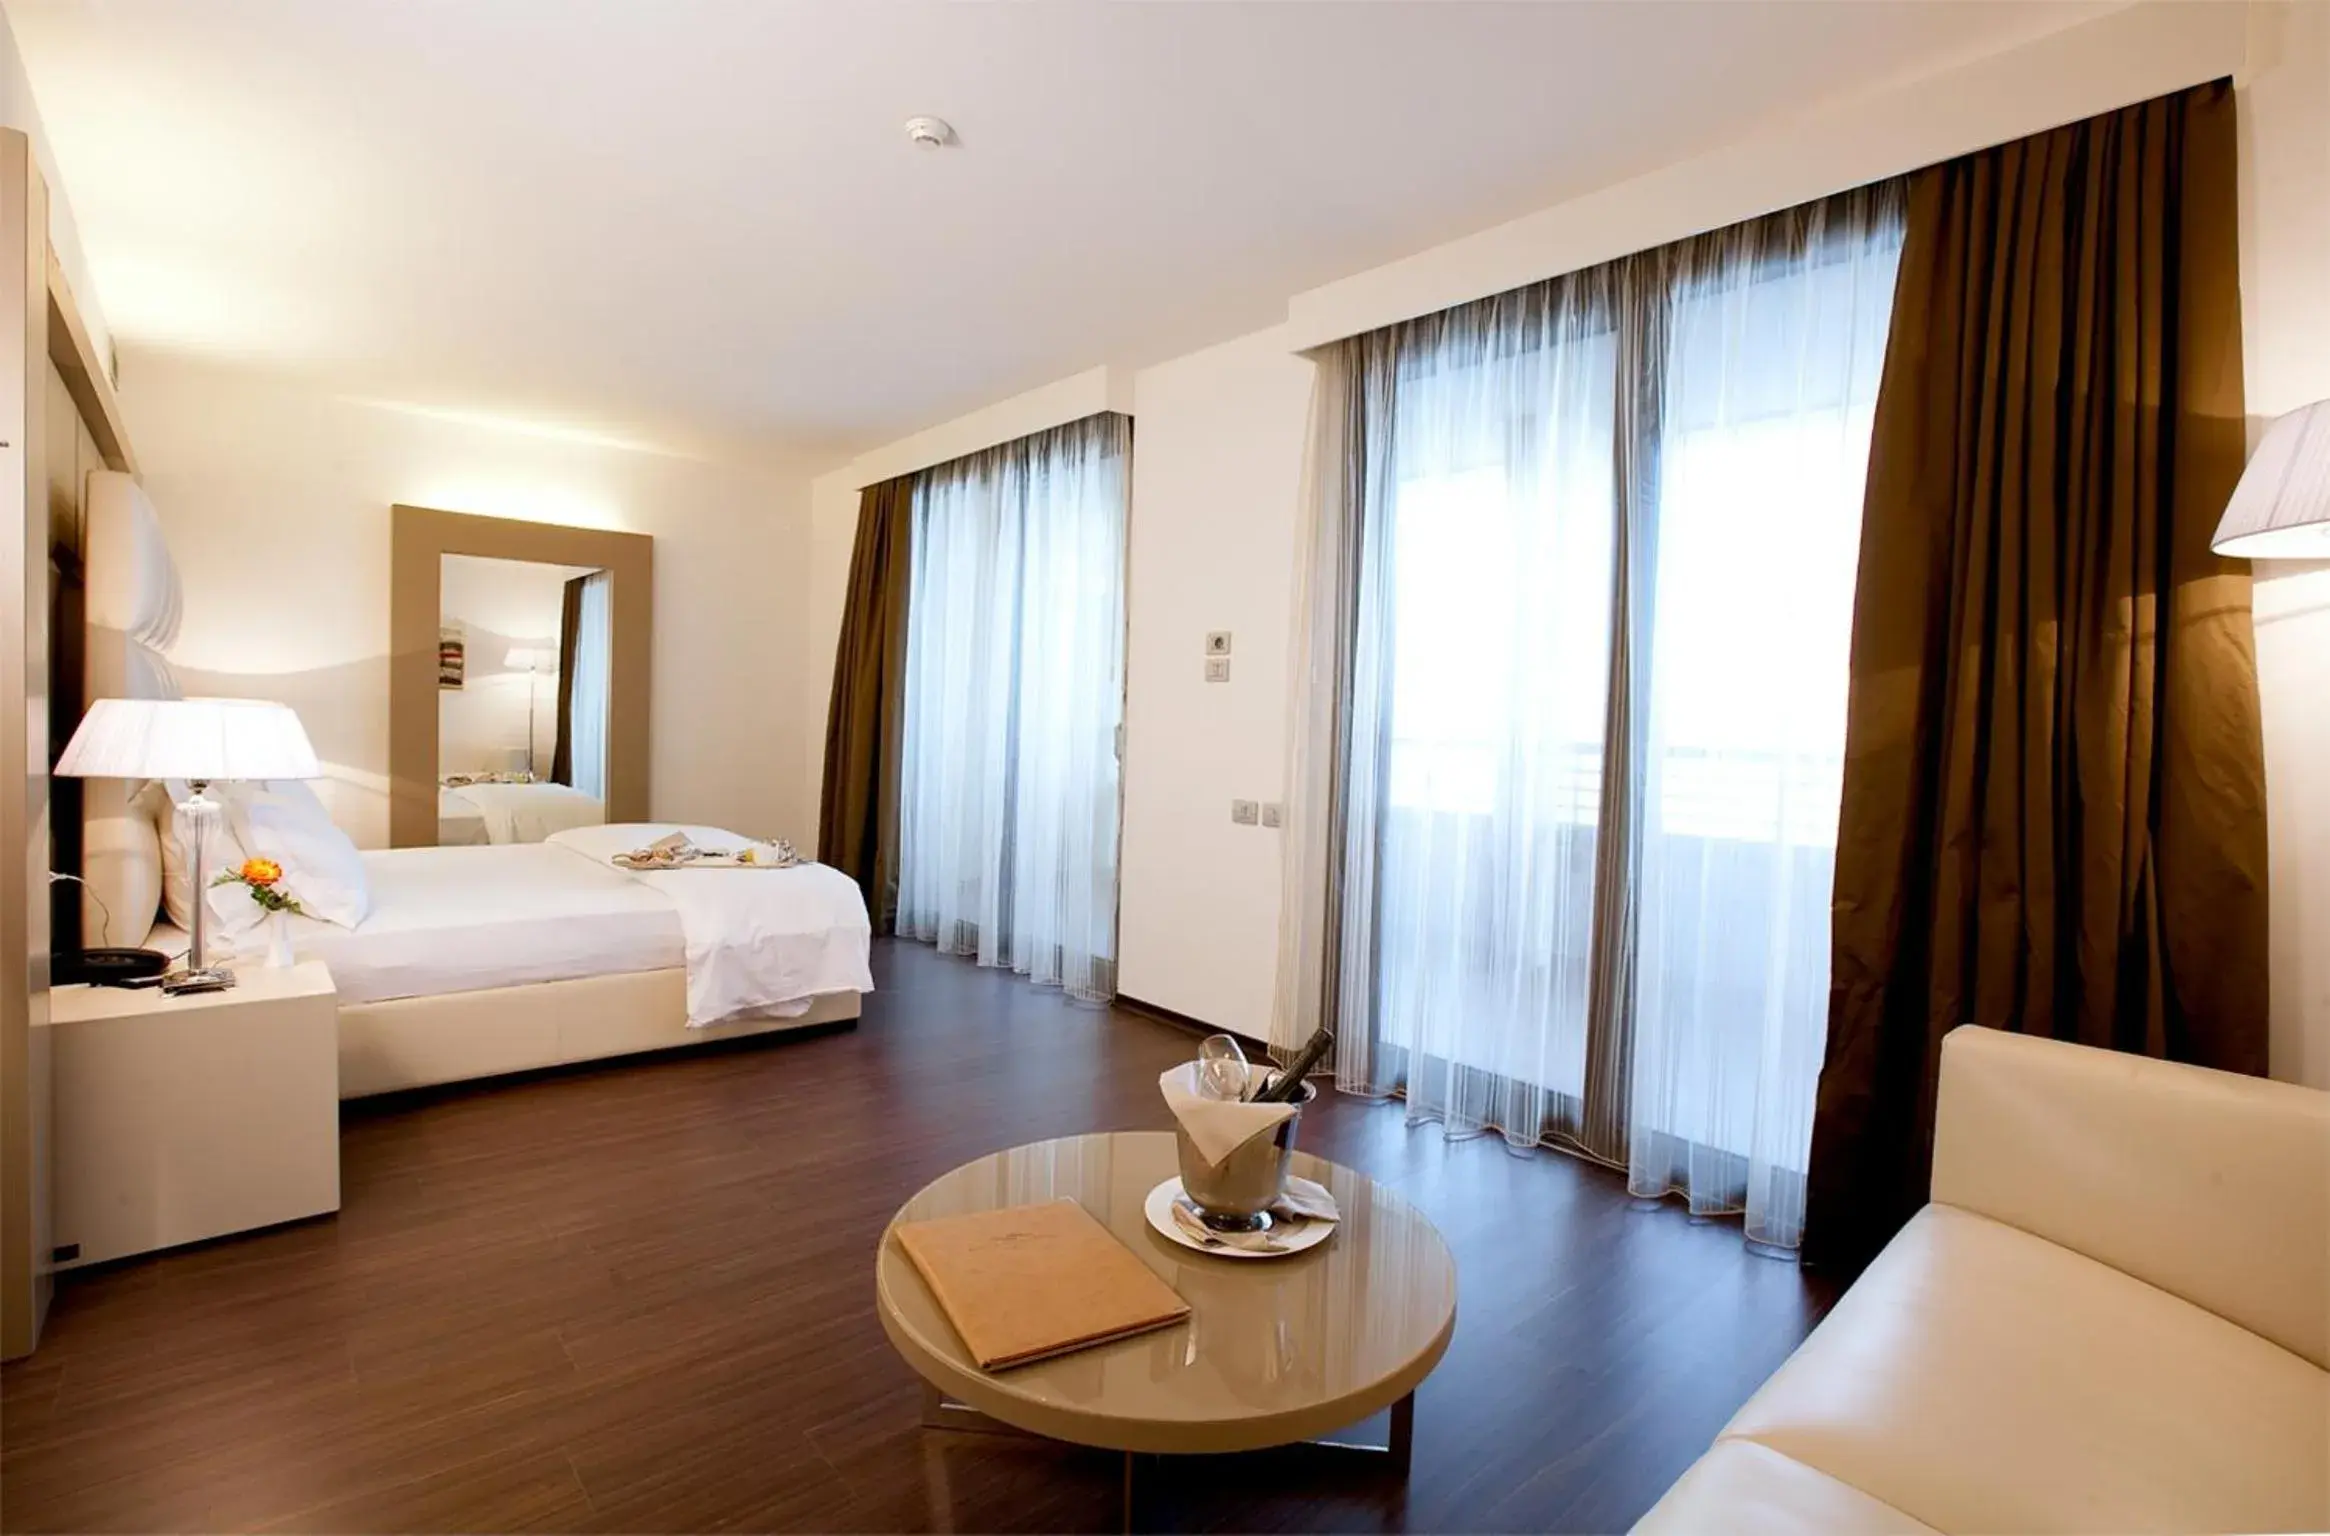 Photo of the whole room in Laguna Palace Hotel Grado